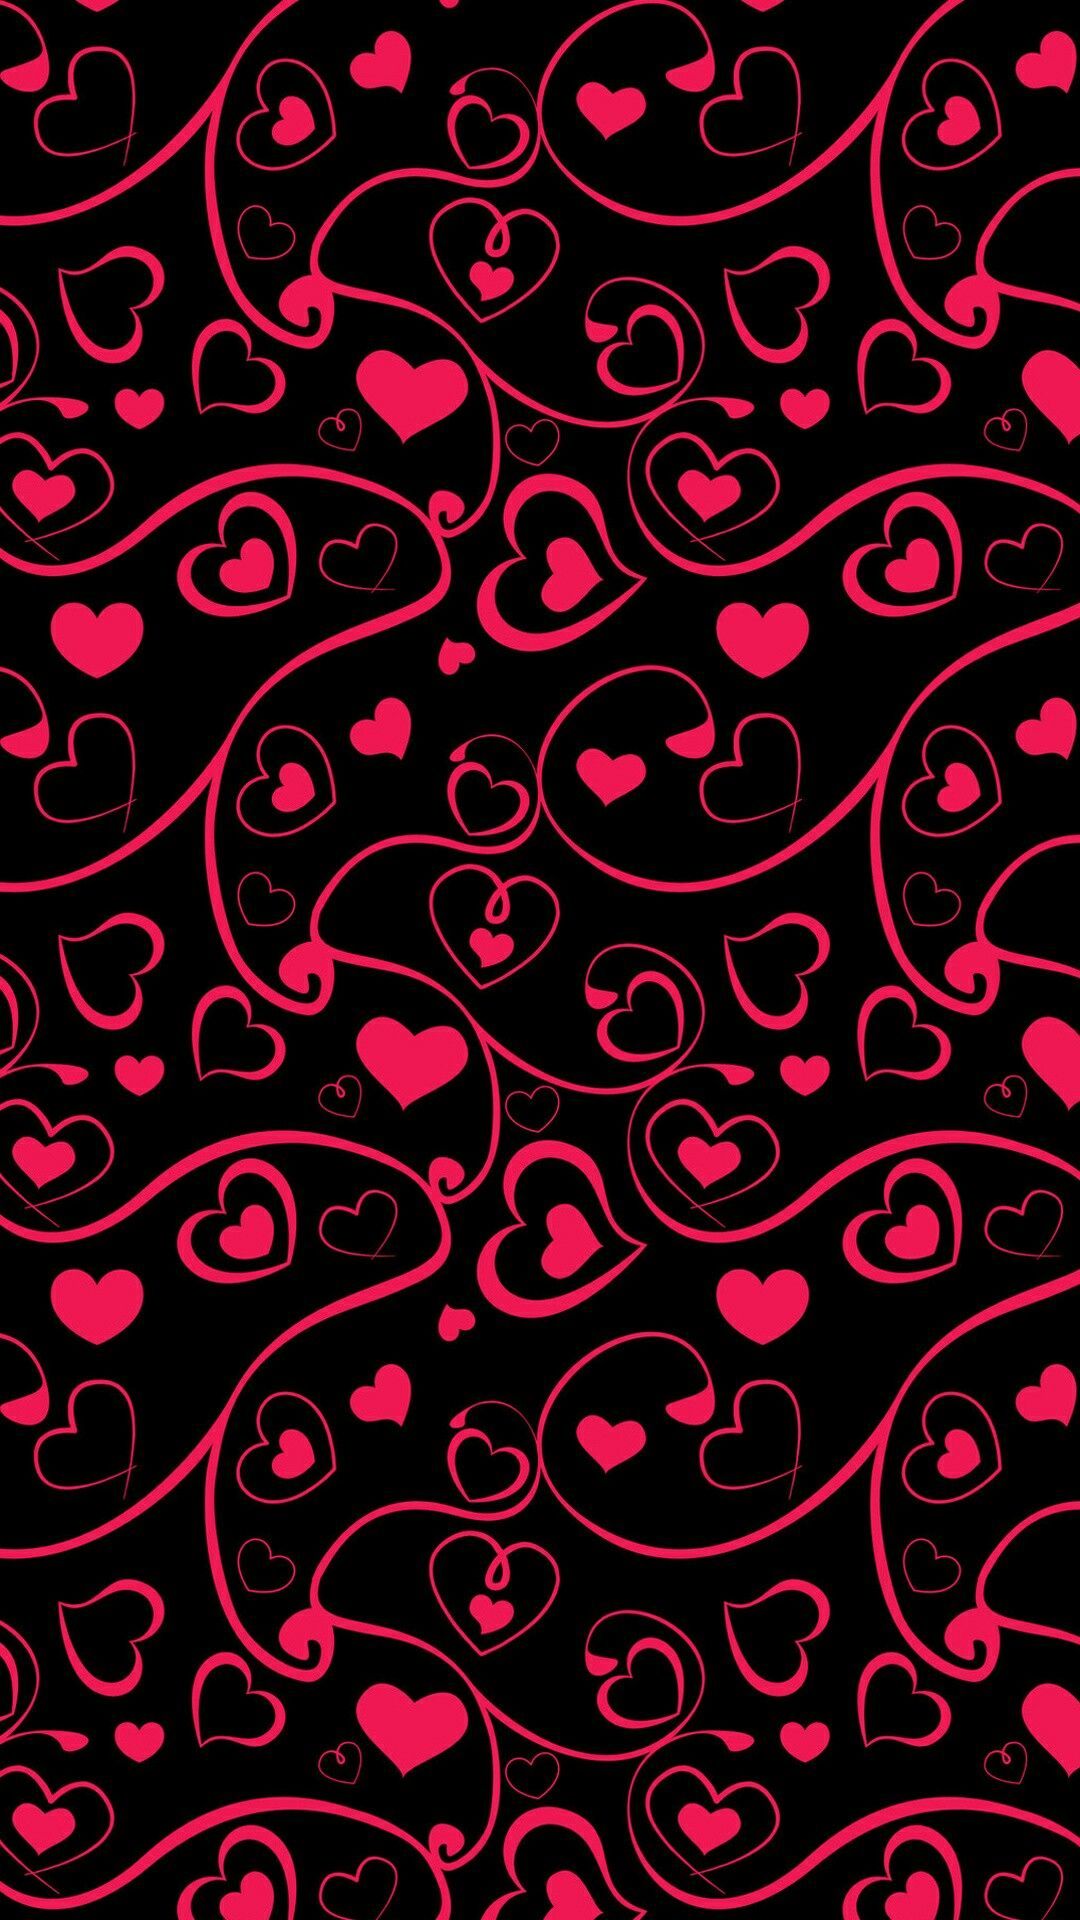 Red & Black Hearts Wallpaper. Heart wallpaper, Background phone wallpaper, Valentines wallpaper